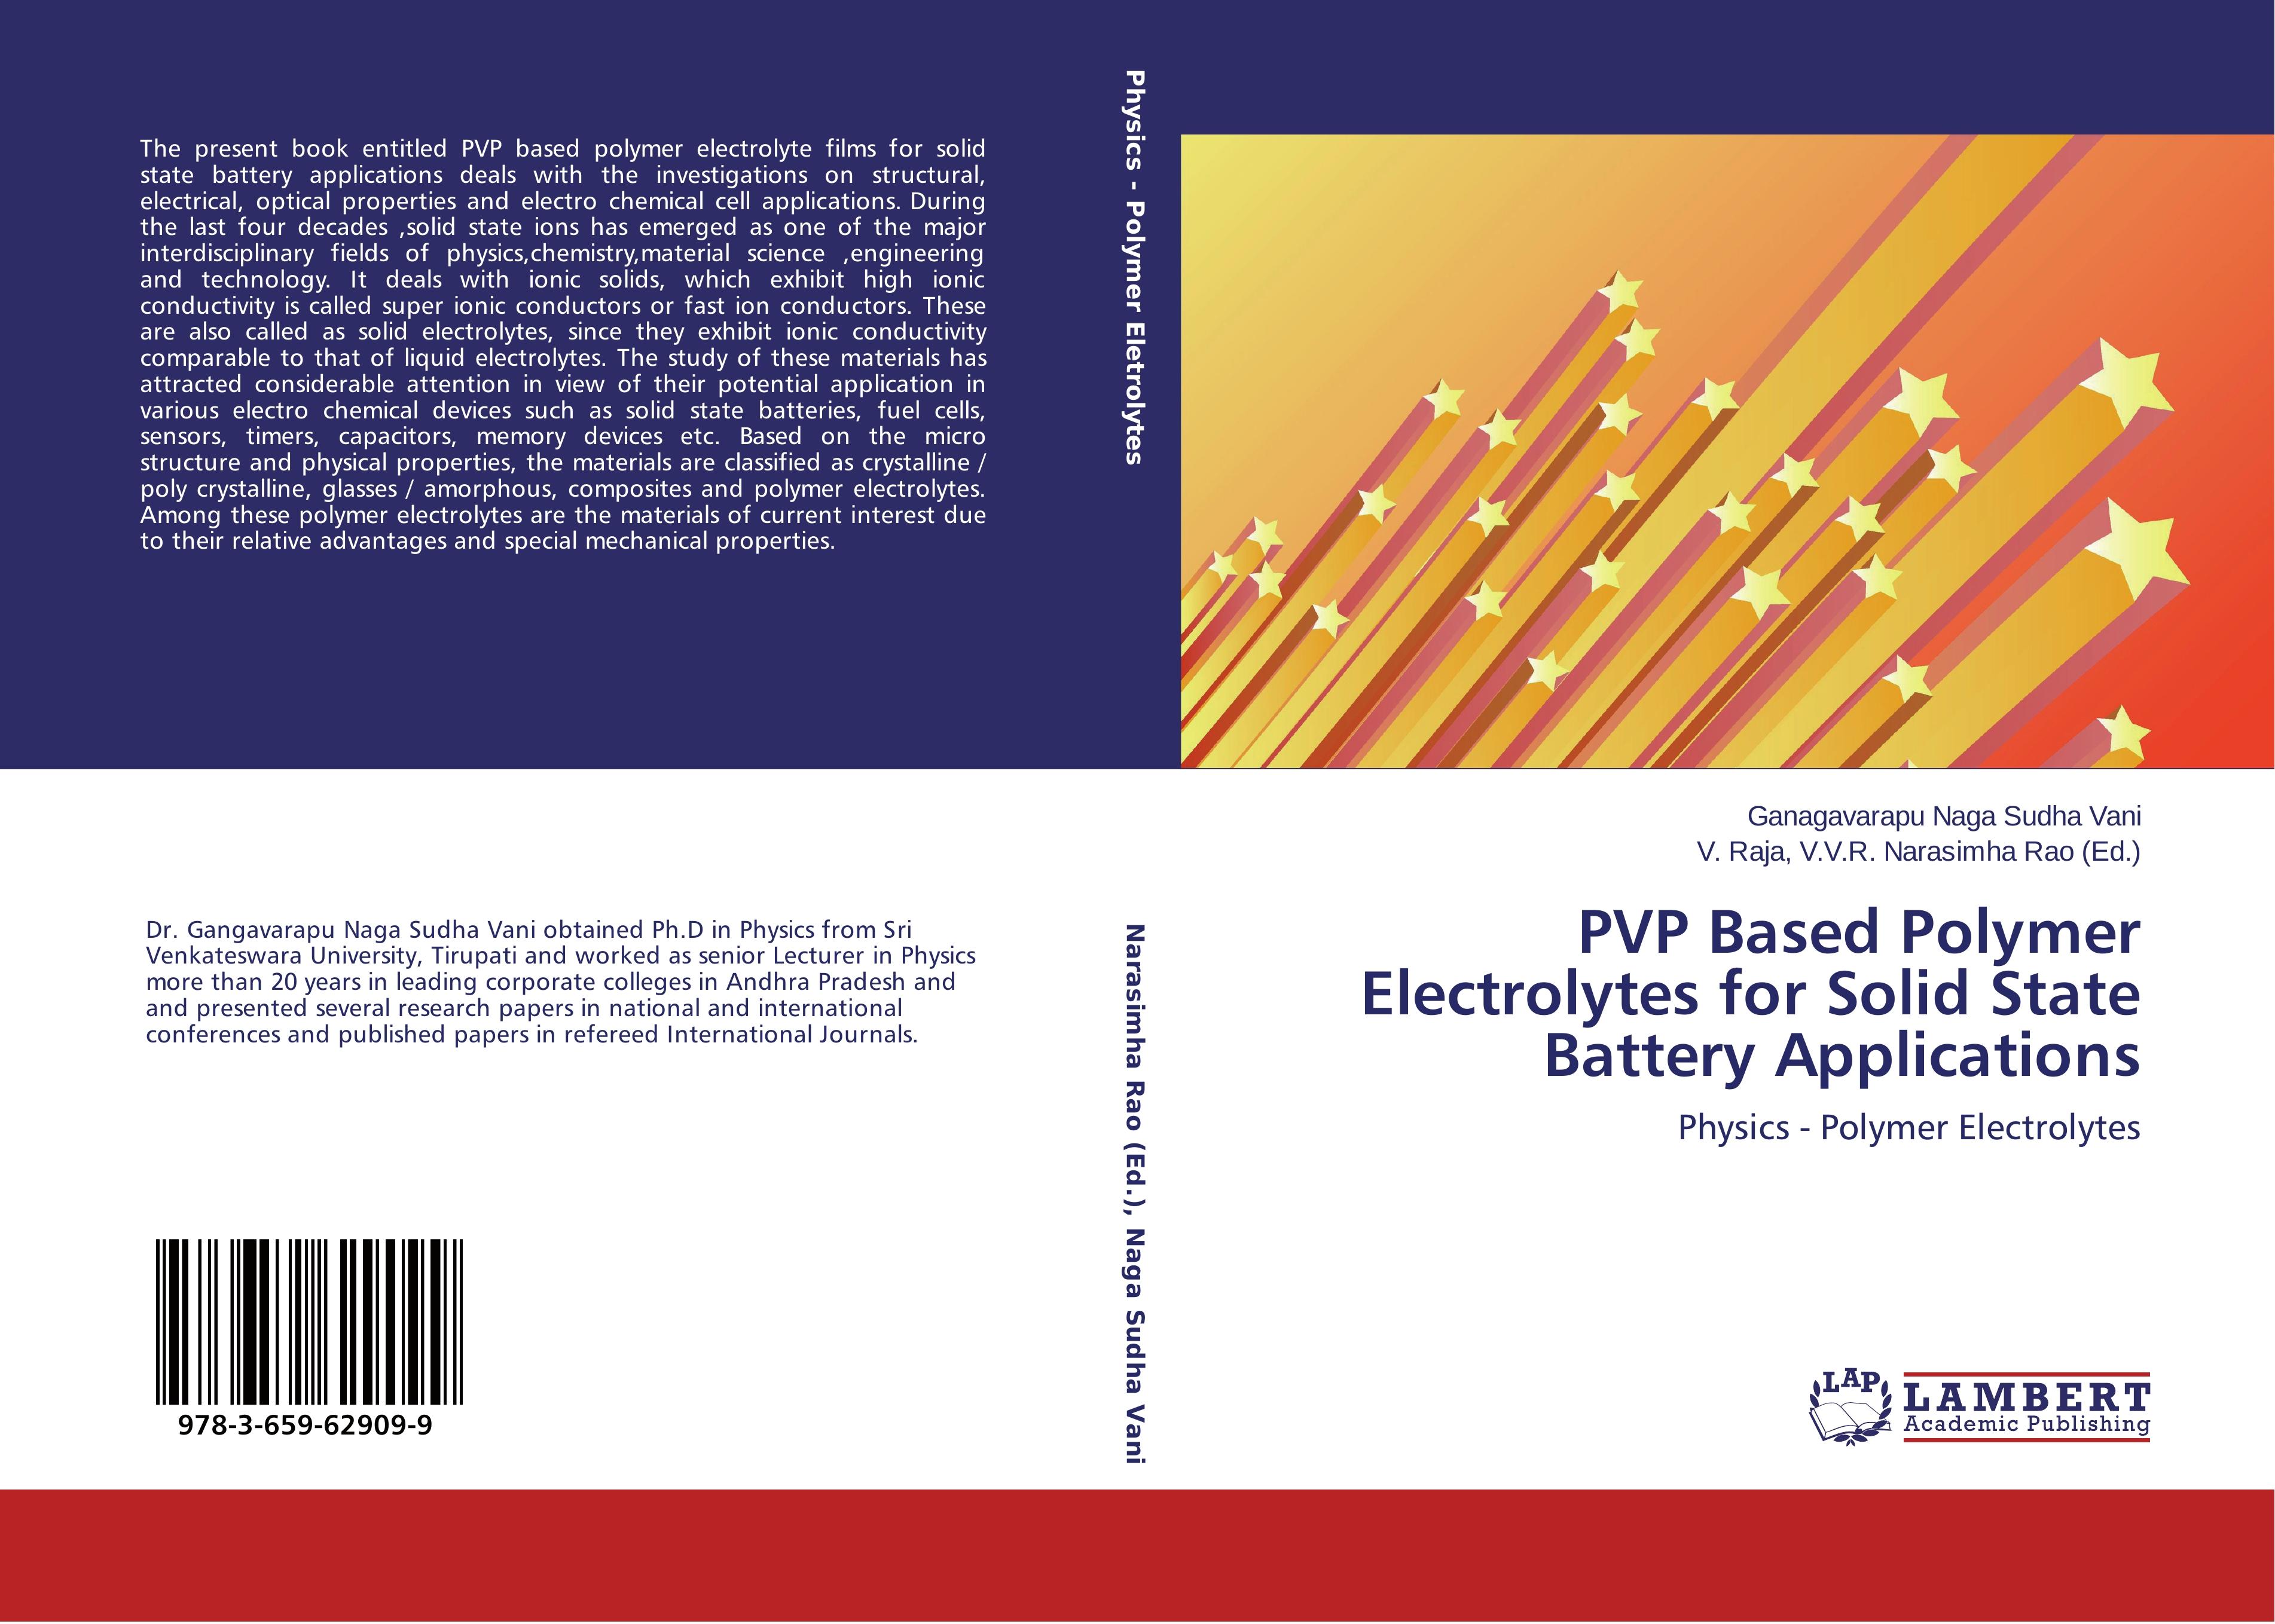 PVP Based Polymer Electrolytes for Solid State Battery Applications / Physics - Polymer Electrolytes / Ganagavarapu Naga Sudha Vani / Taschenbuch / Paperback / 204 S. / Englisch / 2015 - Naga Sudha Vani, Ganagavarapu